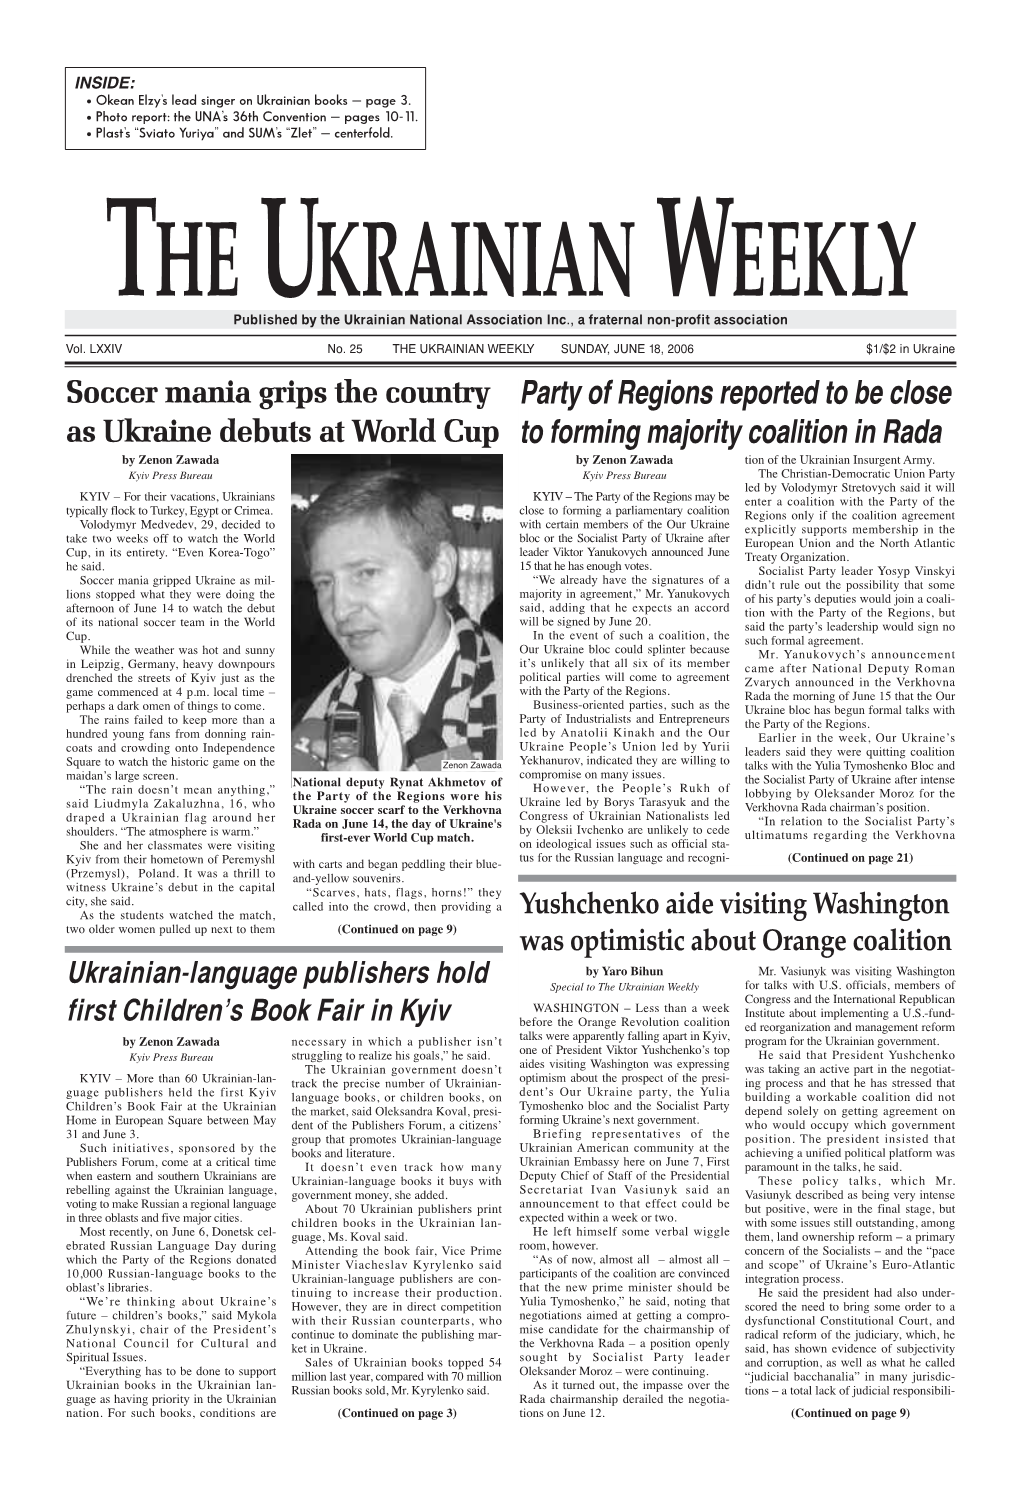 The Ukrainian Weekly 2006, No.25